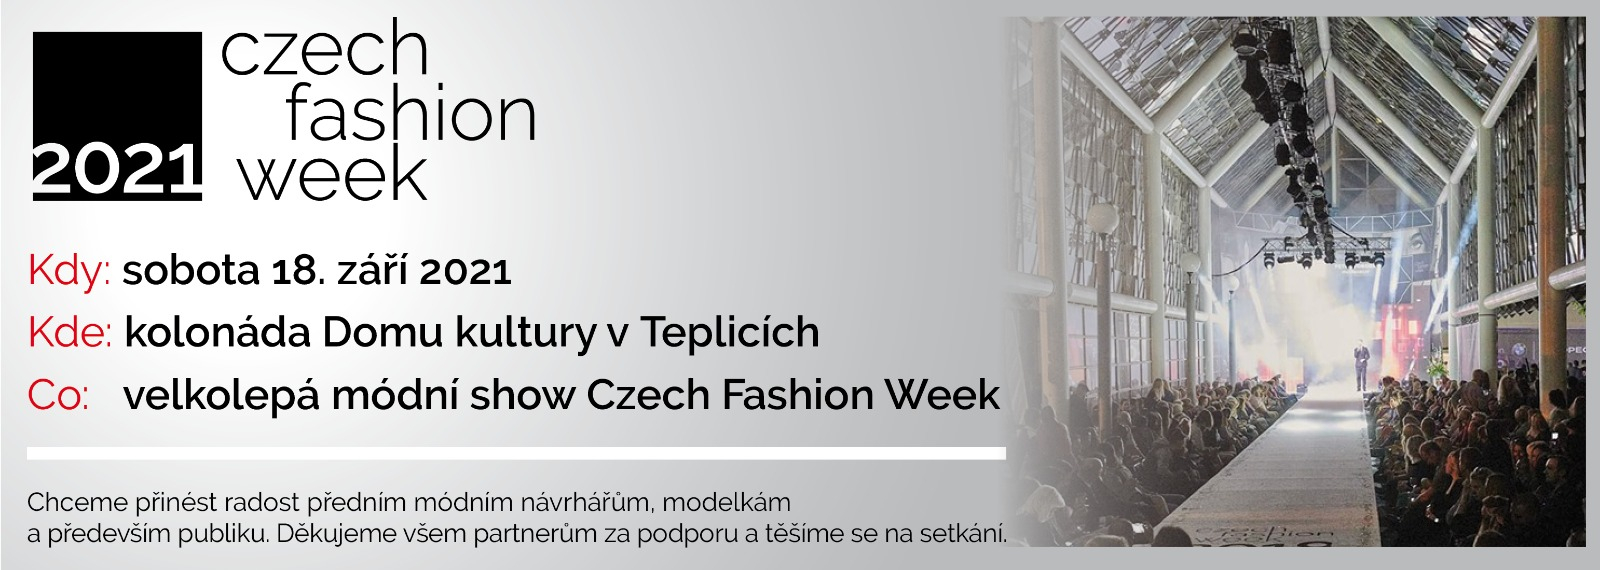 Czech Fashion Week  2021 - Teplice